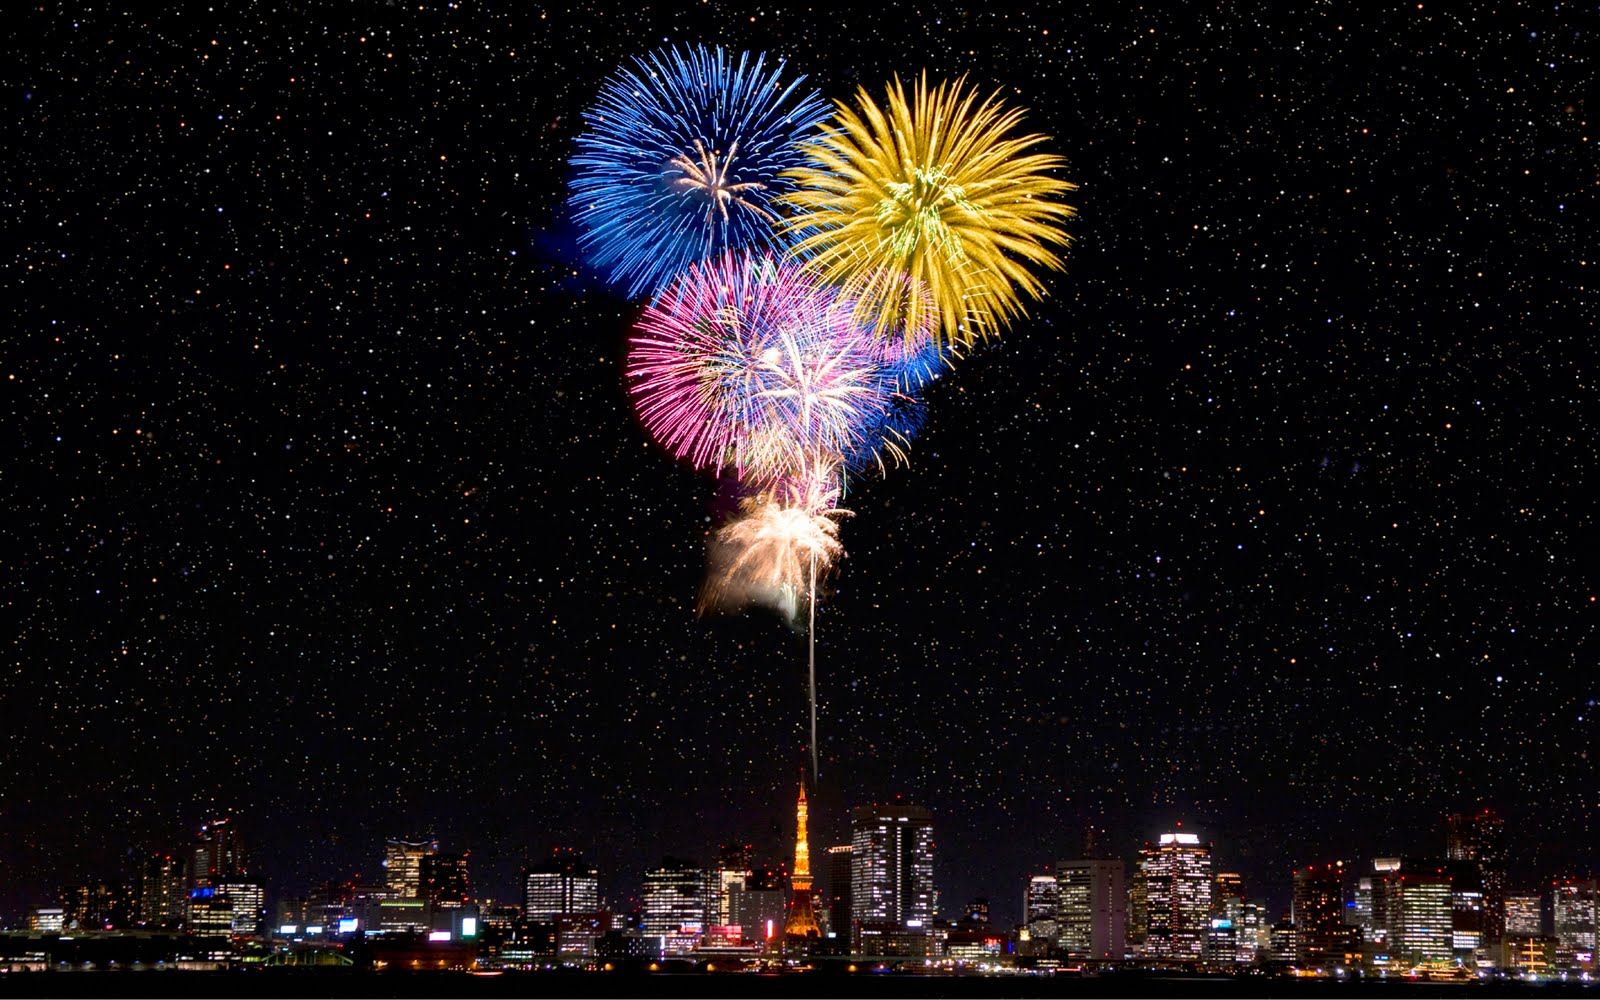 http://2.bp.blogspot.com/-wx0qO4SdagI/TckU0GjT6AI/AAAAAAAAA5U/_gFmpBSPlBw/s1600/6.fireworks+and+night+view+of+tokyo+tower%252C+tokyo%252C+japan.jpg